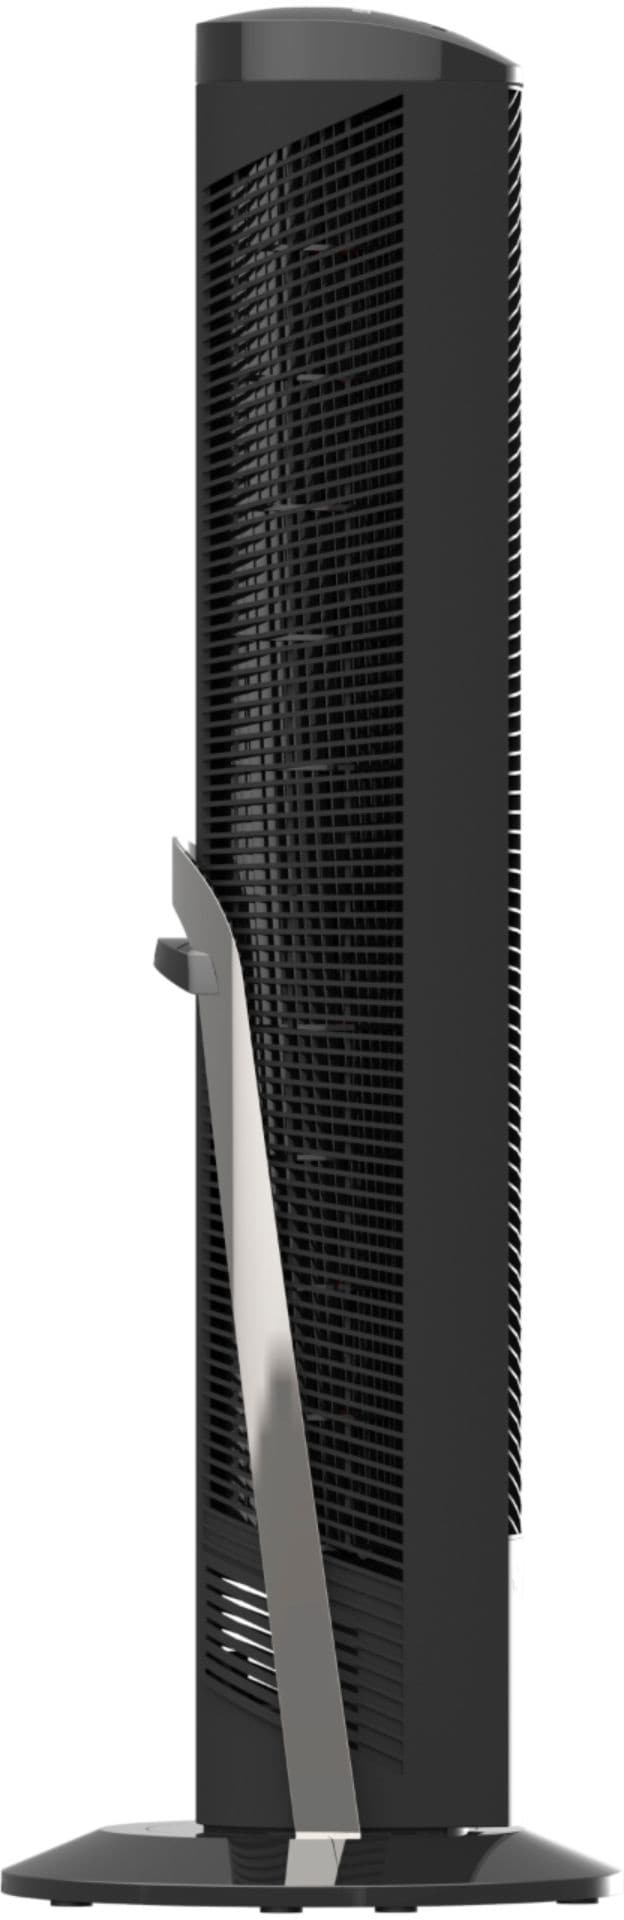 Vornado - OSCR37 Oscillating Tower Fan with Remote - Black_7